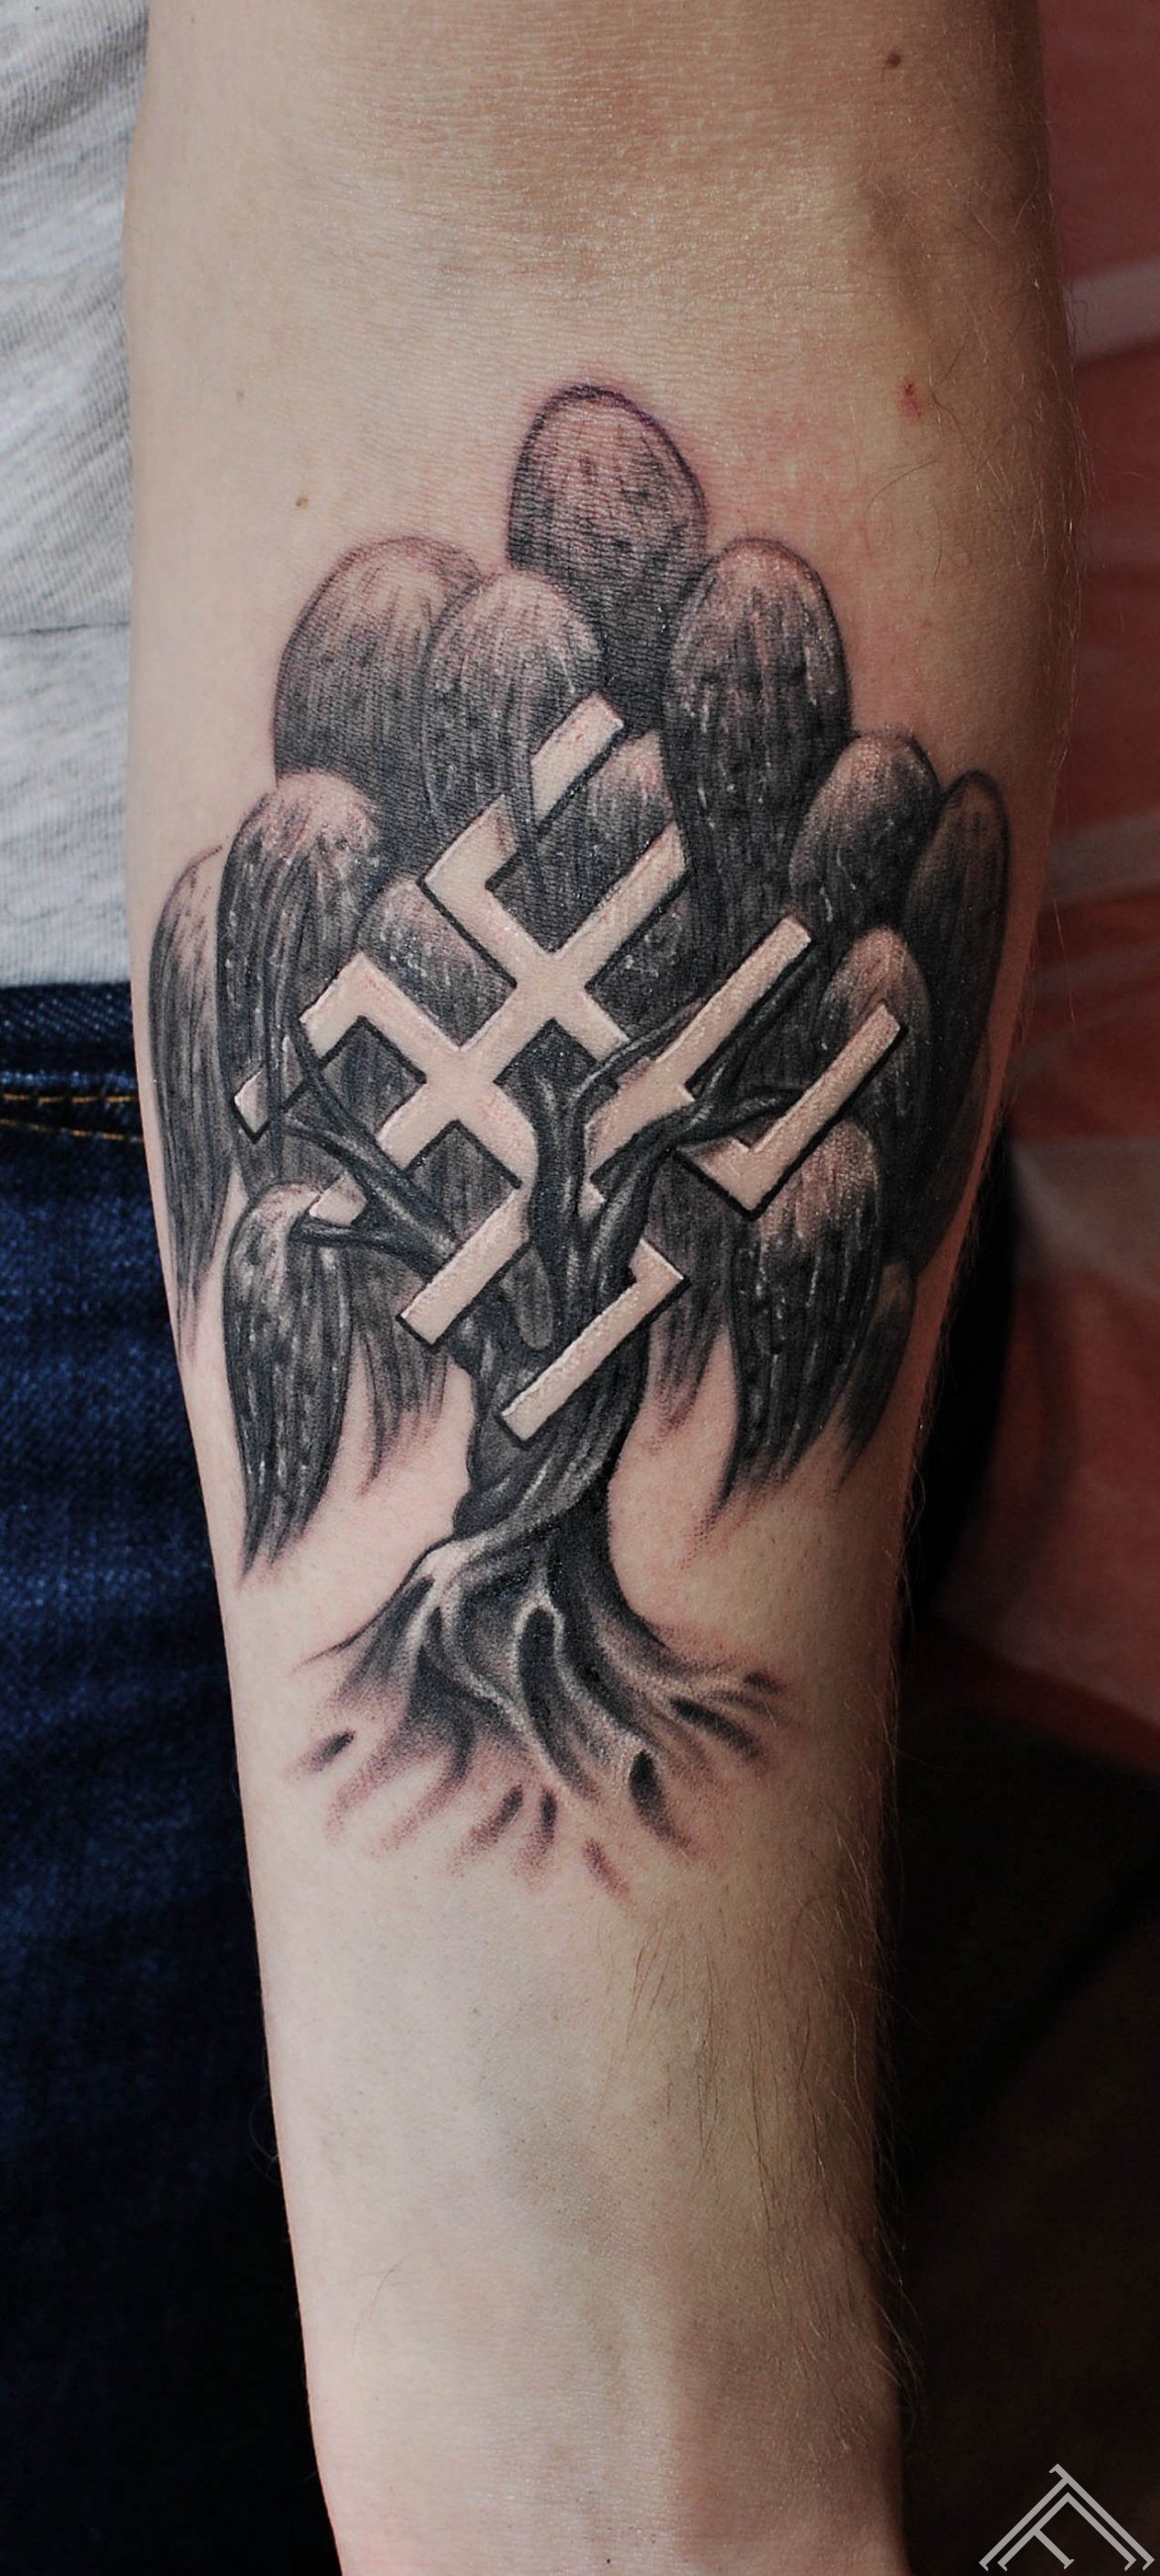 16janisandersons-tattoo-tattoofrequency-art-riga-latviesuzimes-latviesu-latvija-simbols-symbol-latviansymbol-studija-salons-tetovesana-jumis-auseklis